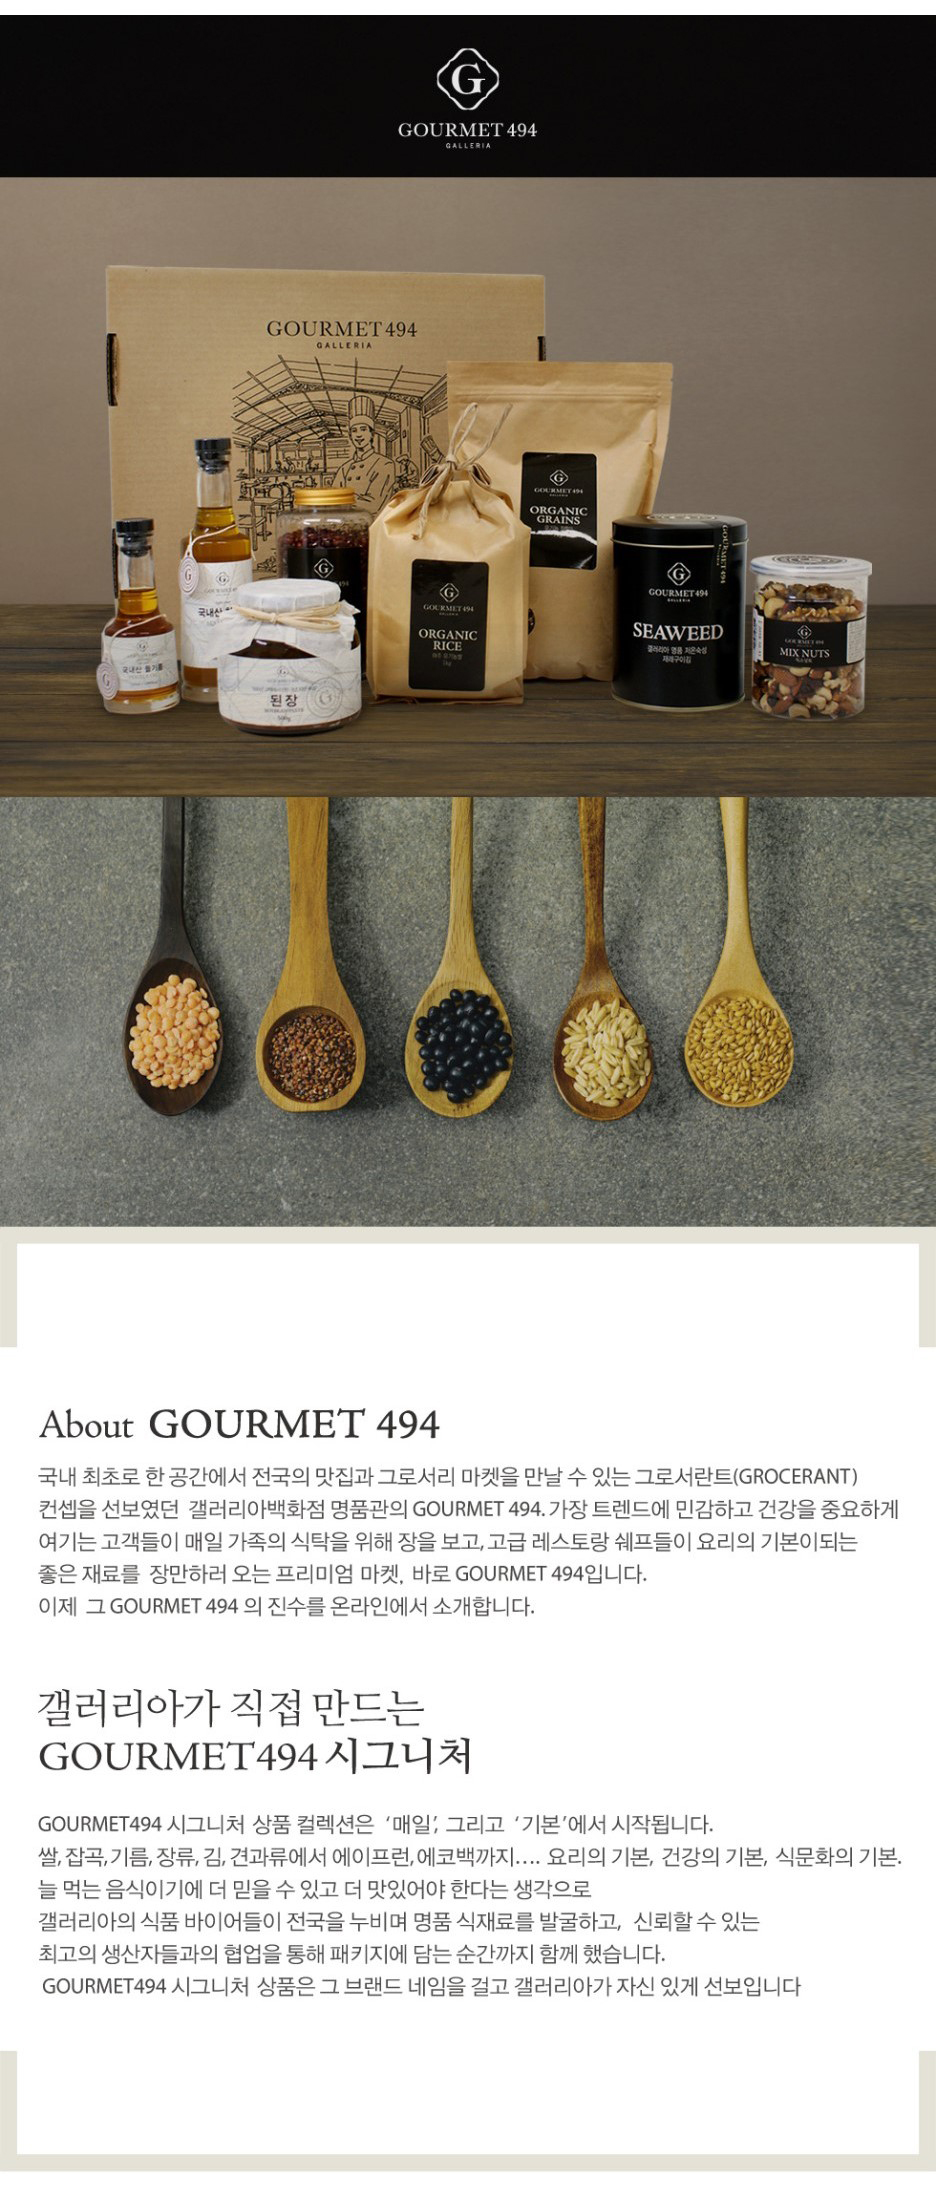 韓國食品-[Gourmet494] Galleria494 Demi-glace Sauce 200g